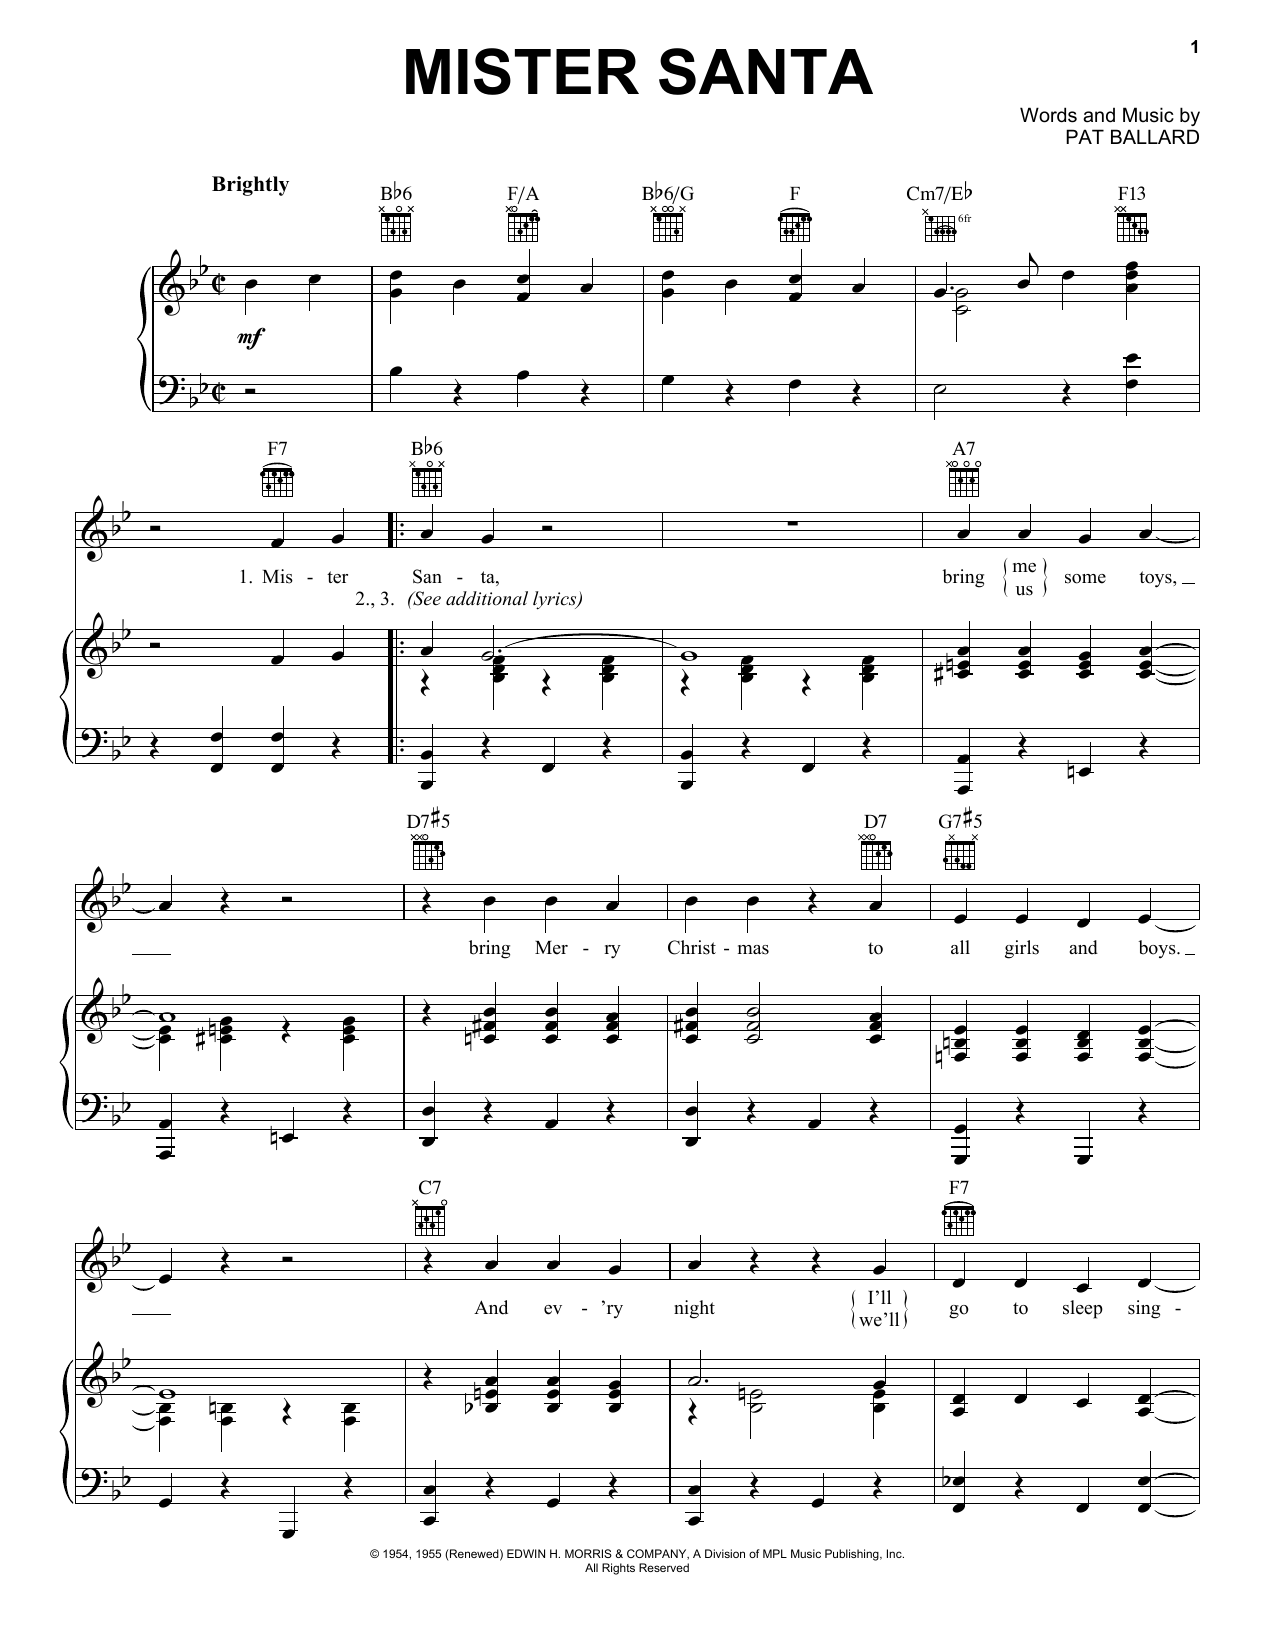 Pat Ballard Mister Santa Sheet Music Notes & Chords for Accordion - Download or Print PDF